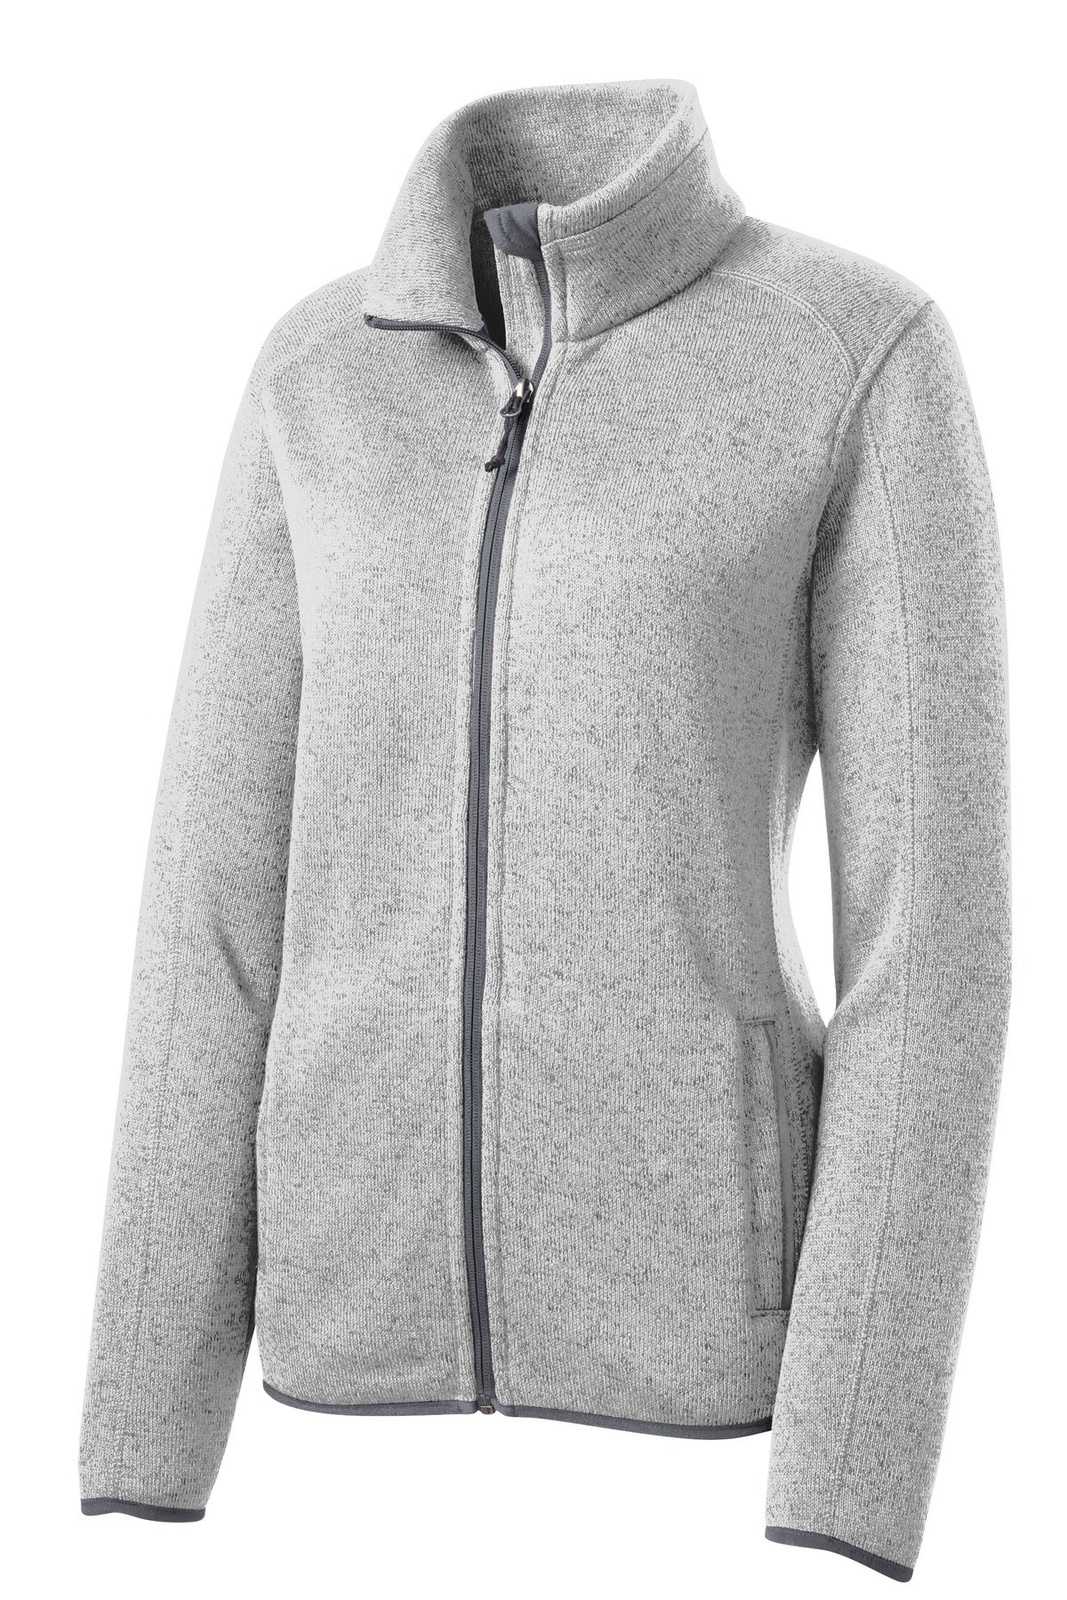 Port Authority L232 Ladies Sweater Fleece Jacket - Gray Heather